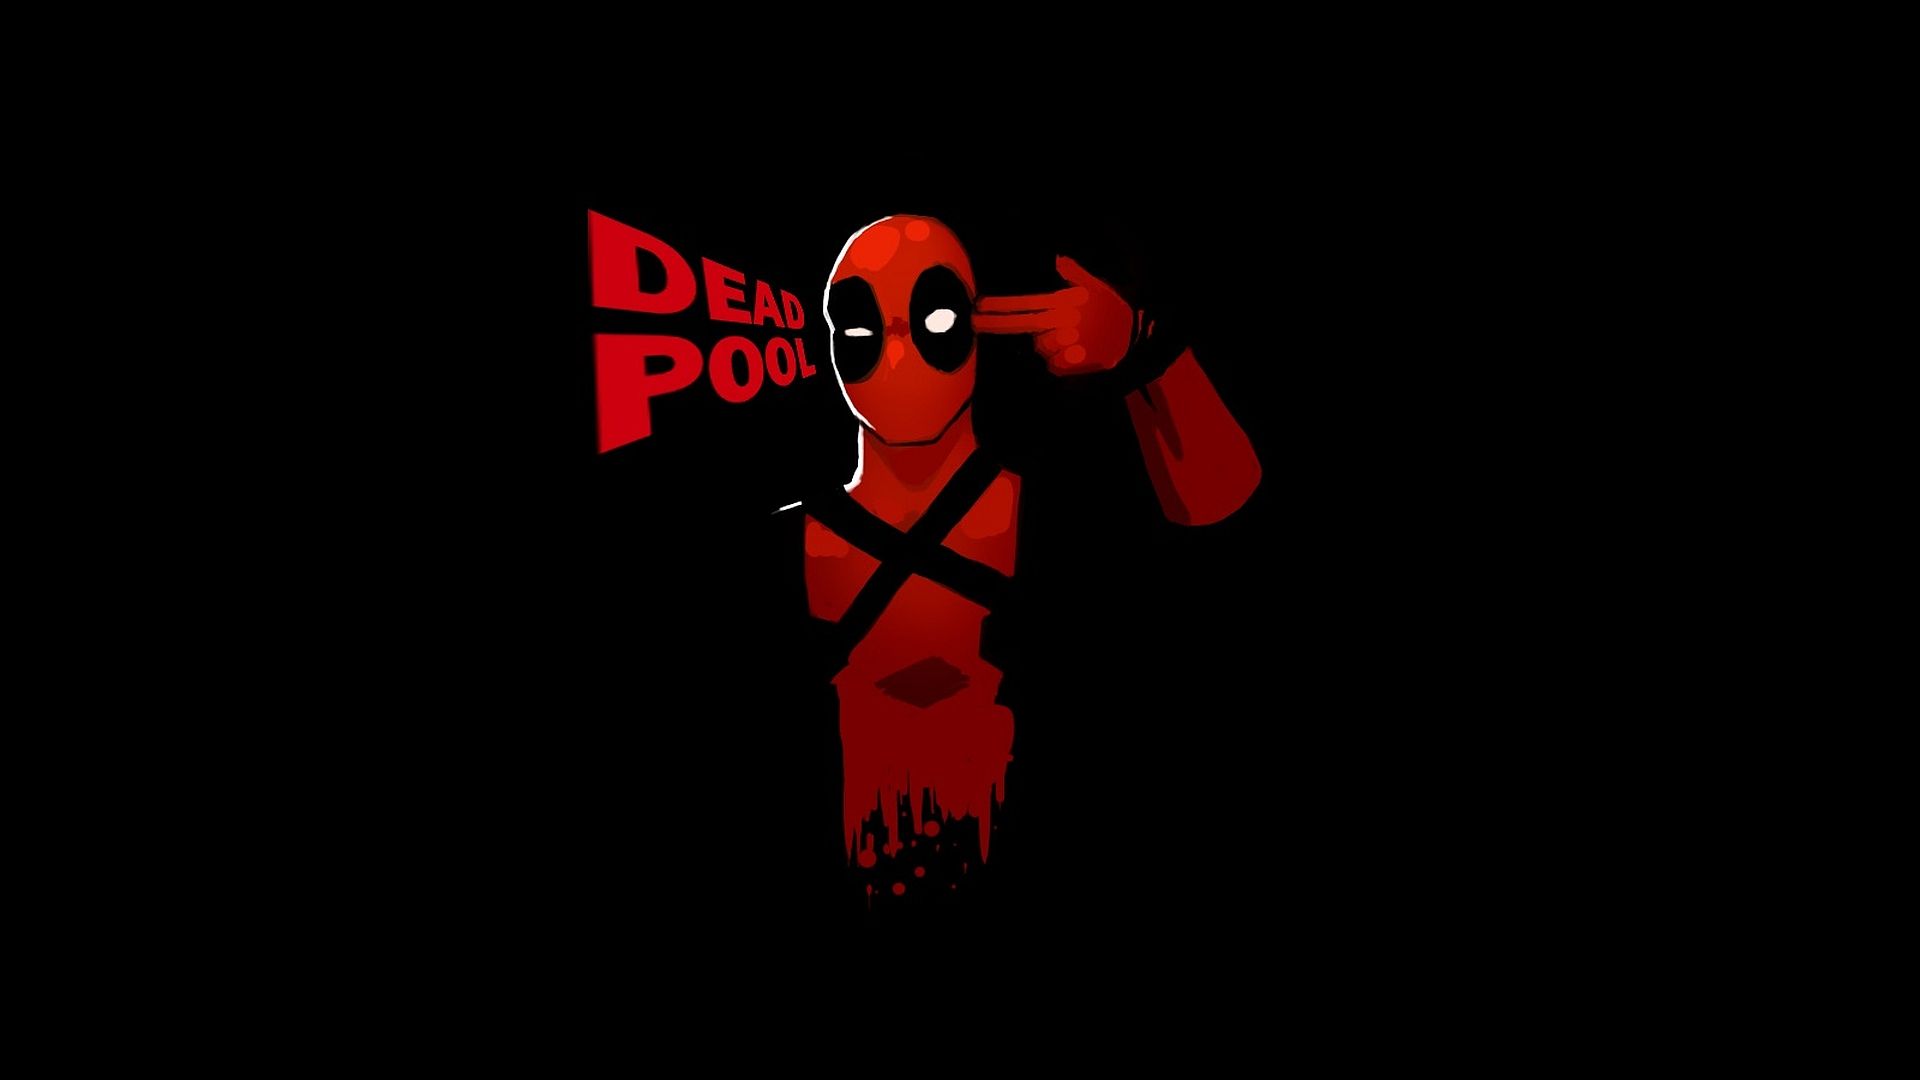 Deadpool Featured Image